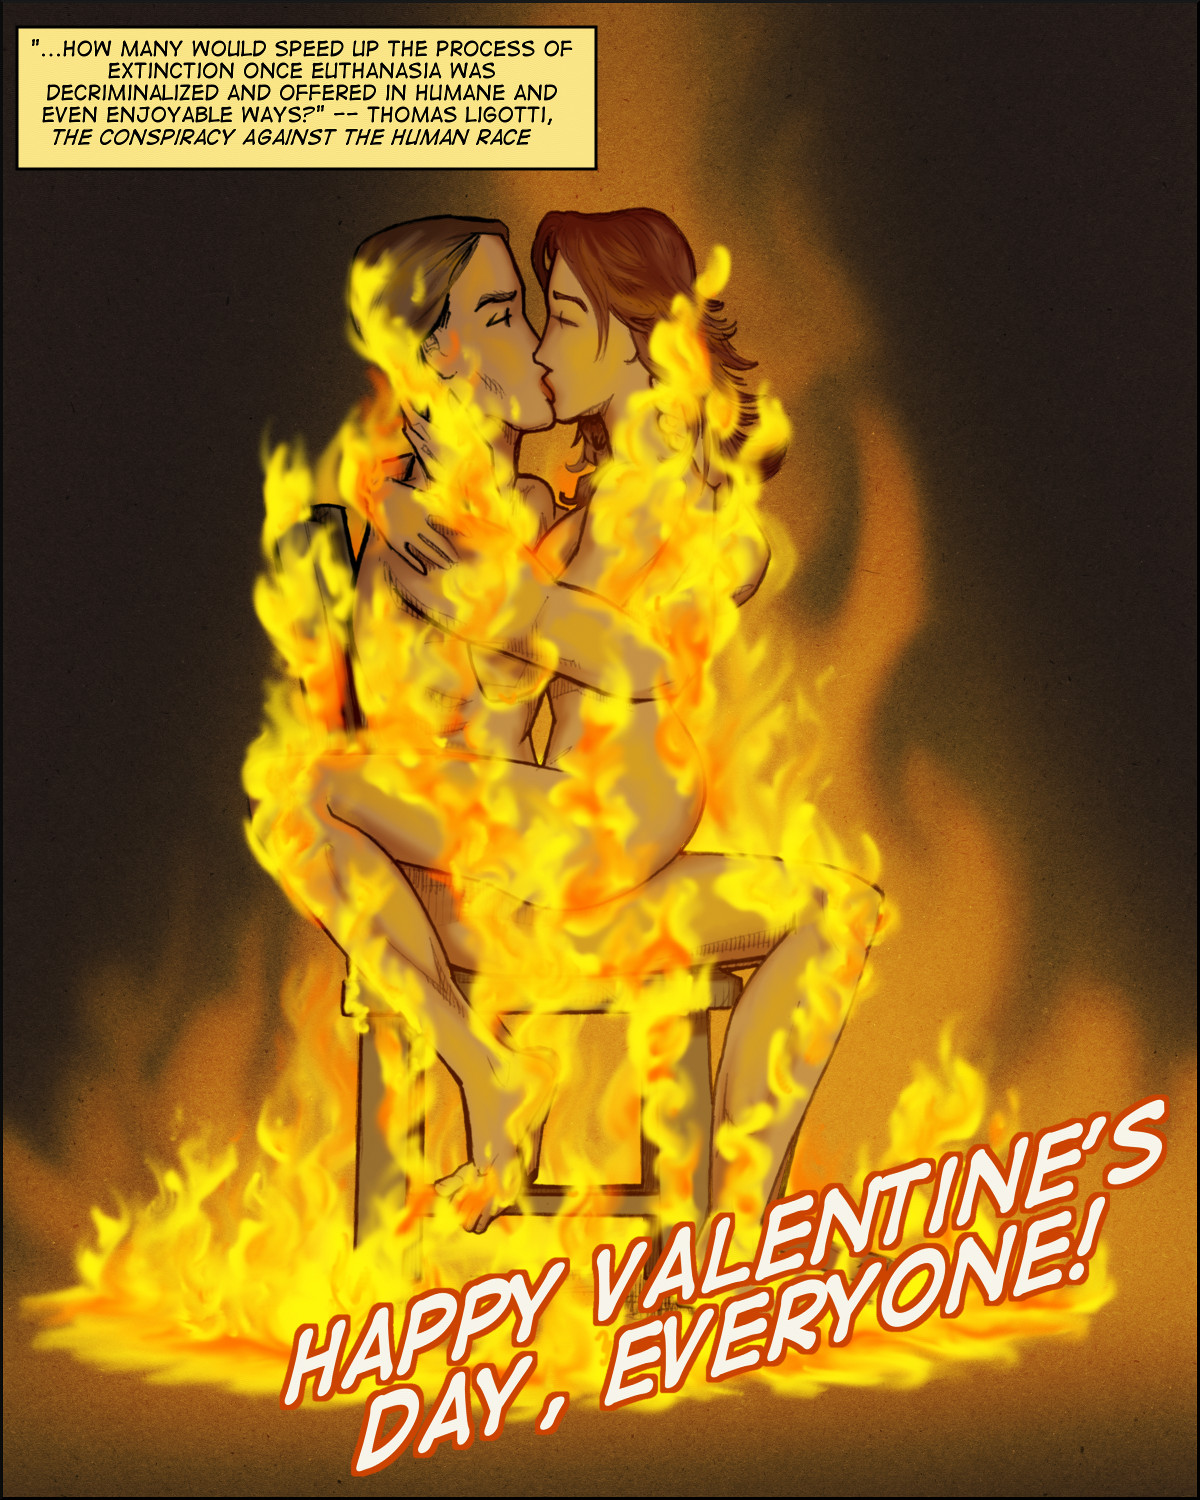 Lovers self-immolate -- how romantic!